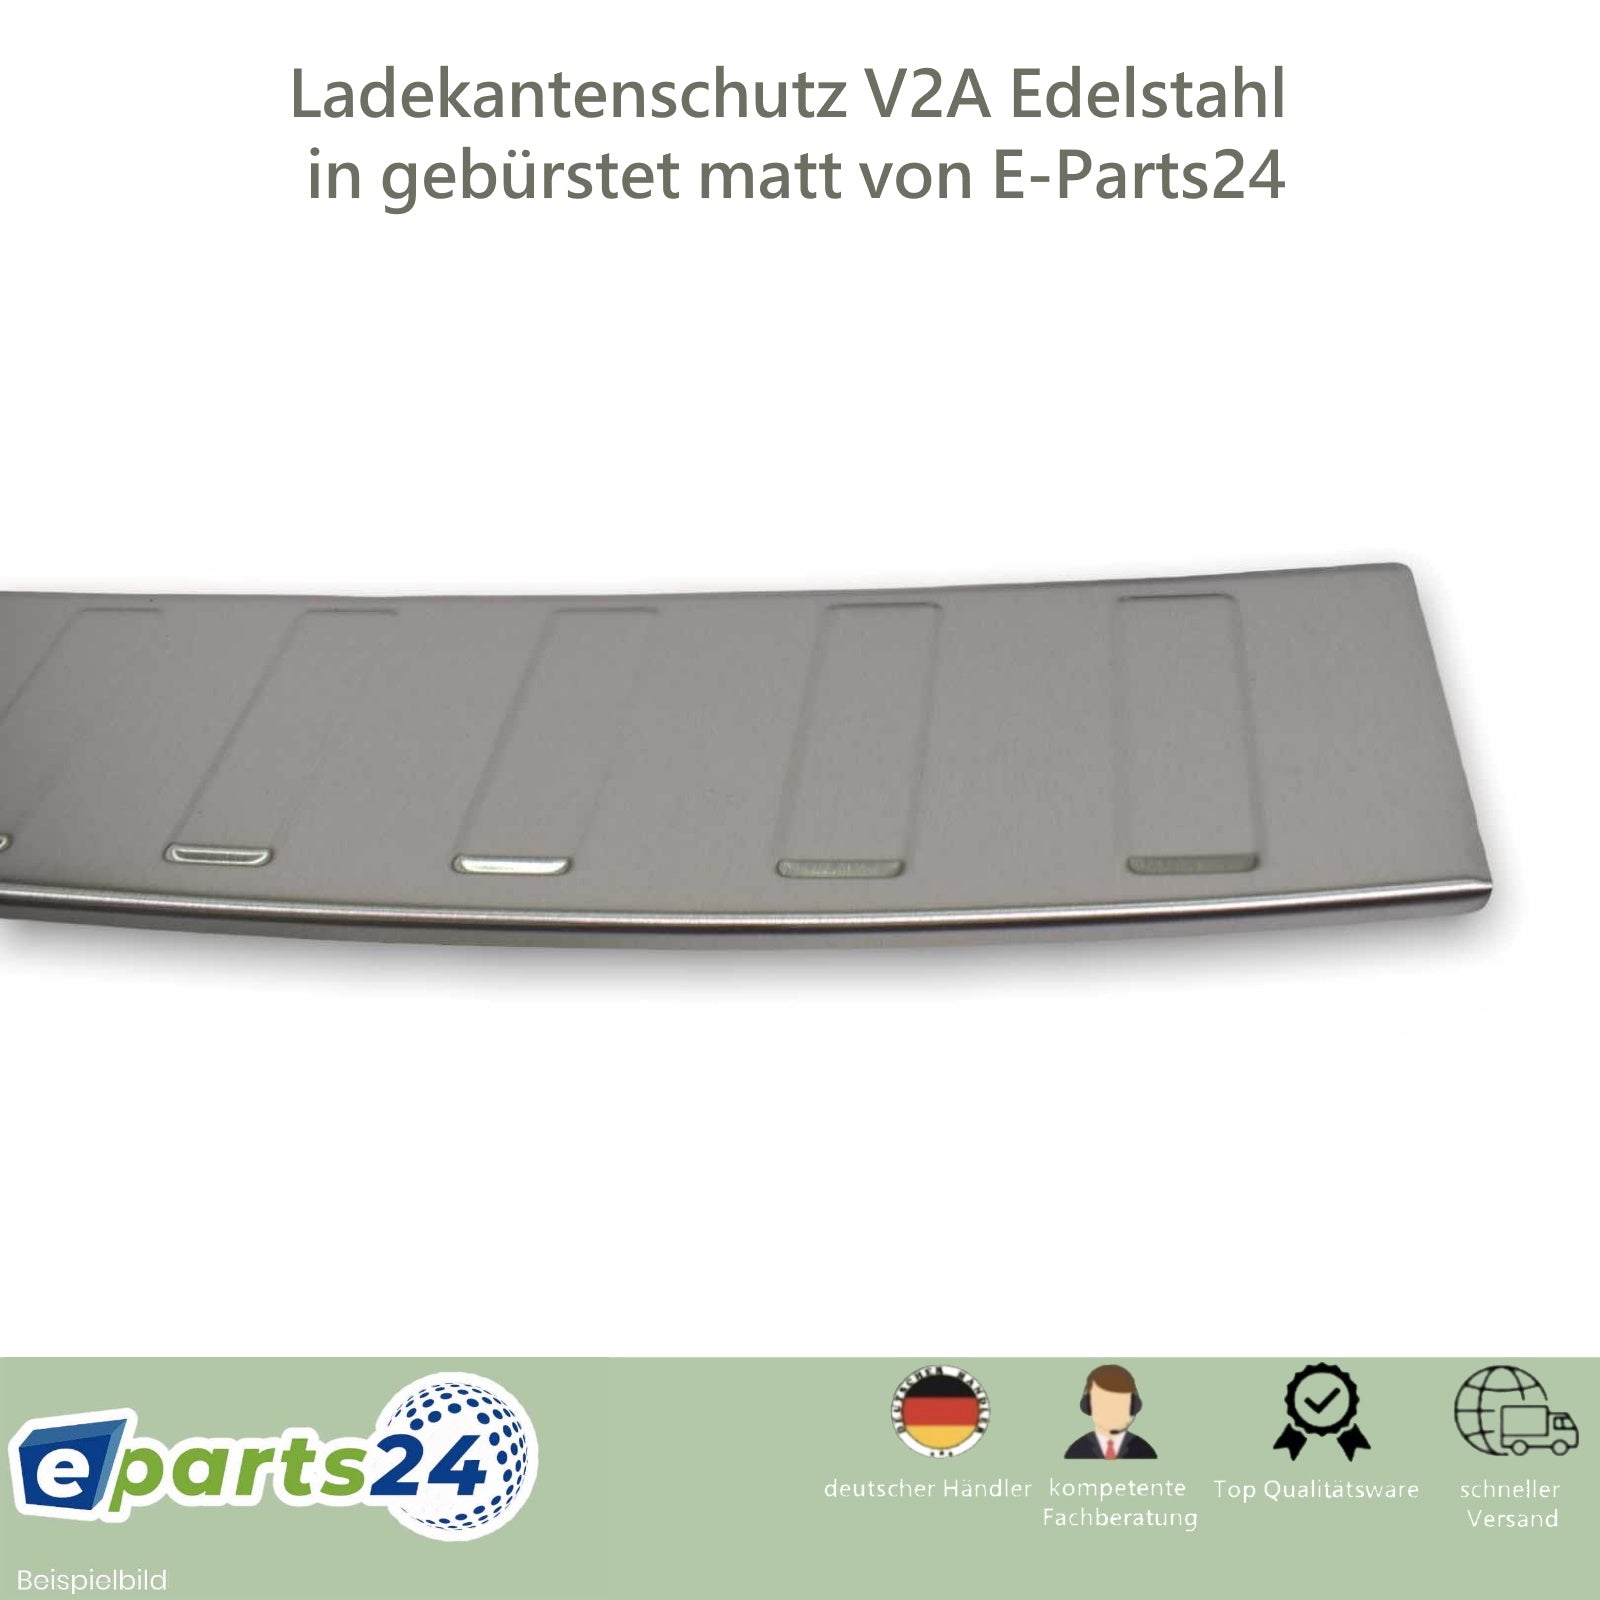 Ladekantenschutz Heckschutz für VW 1T3 Bj Edelstahl g Touran – 2010-2015 E-Parts24